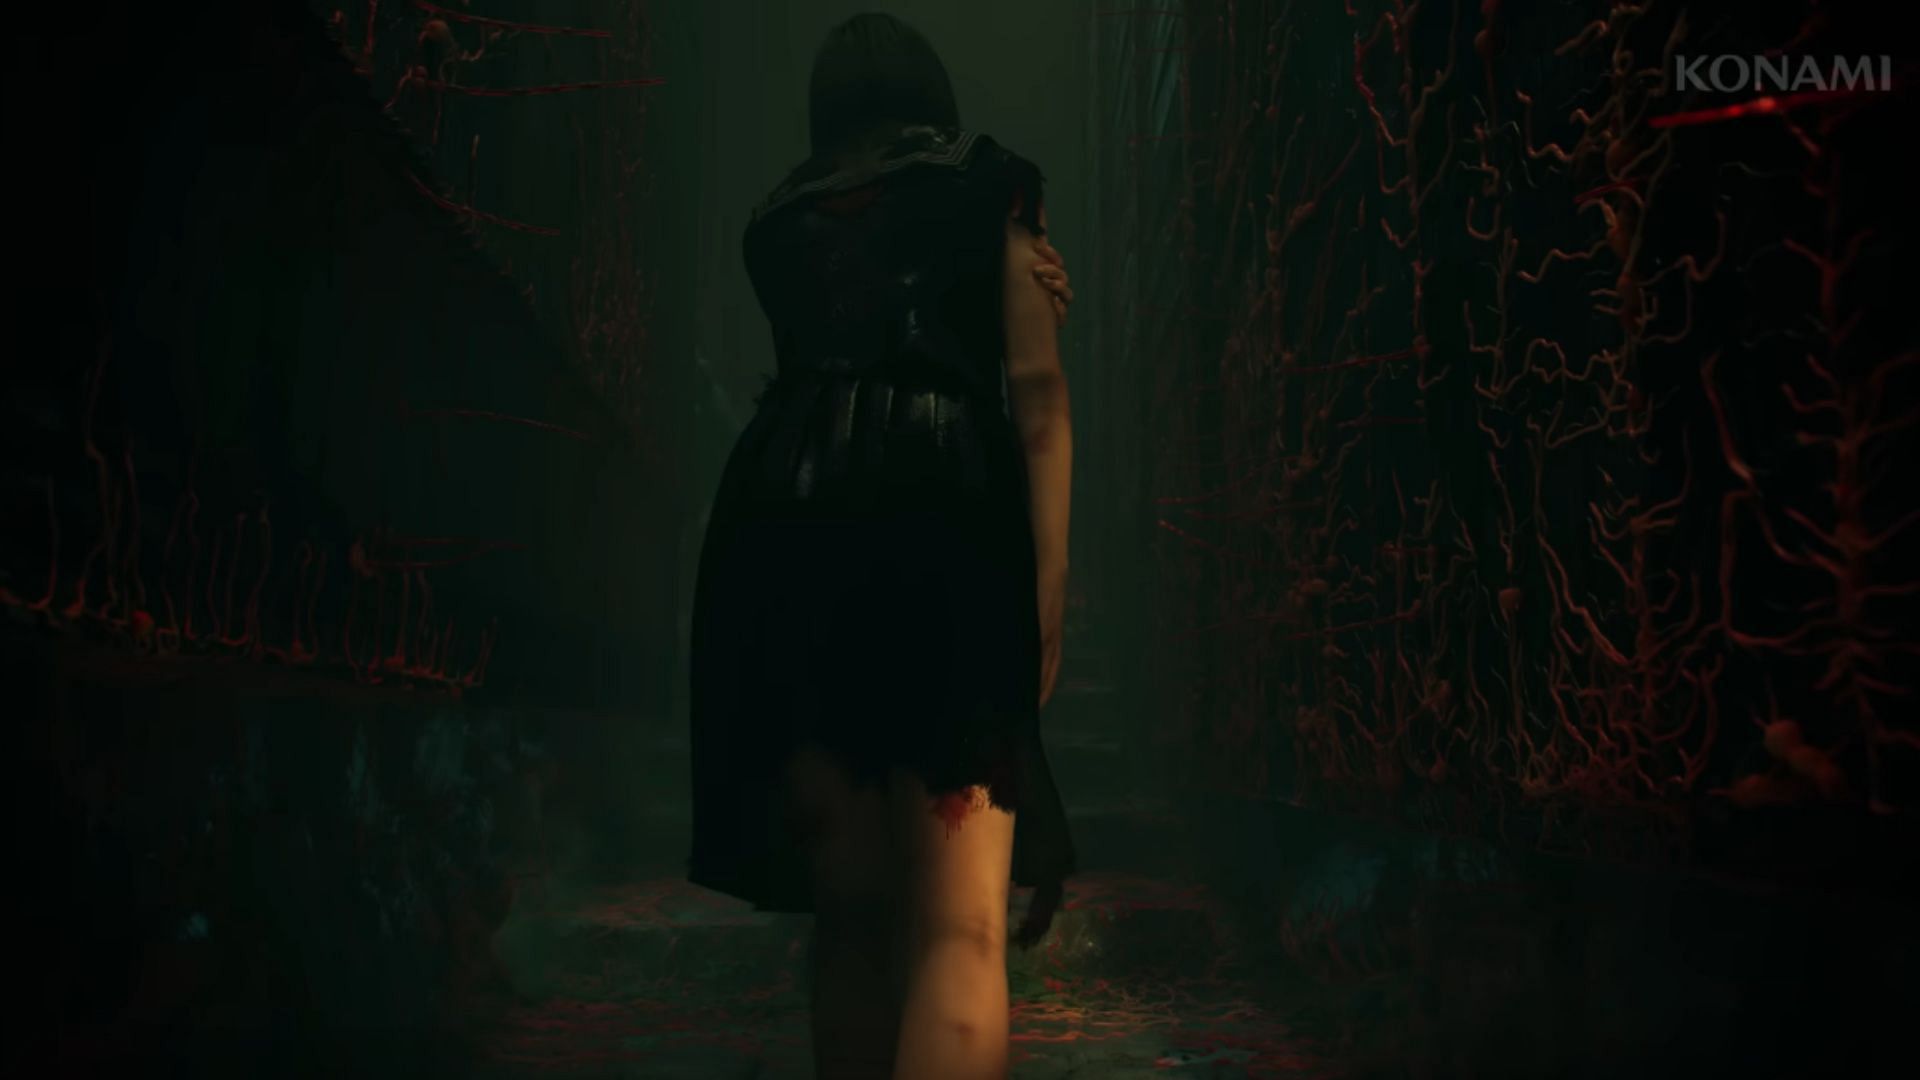 Silent Hill F Teaser Trailer 